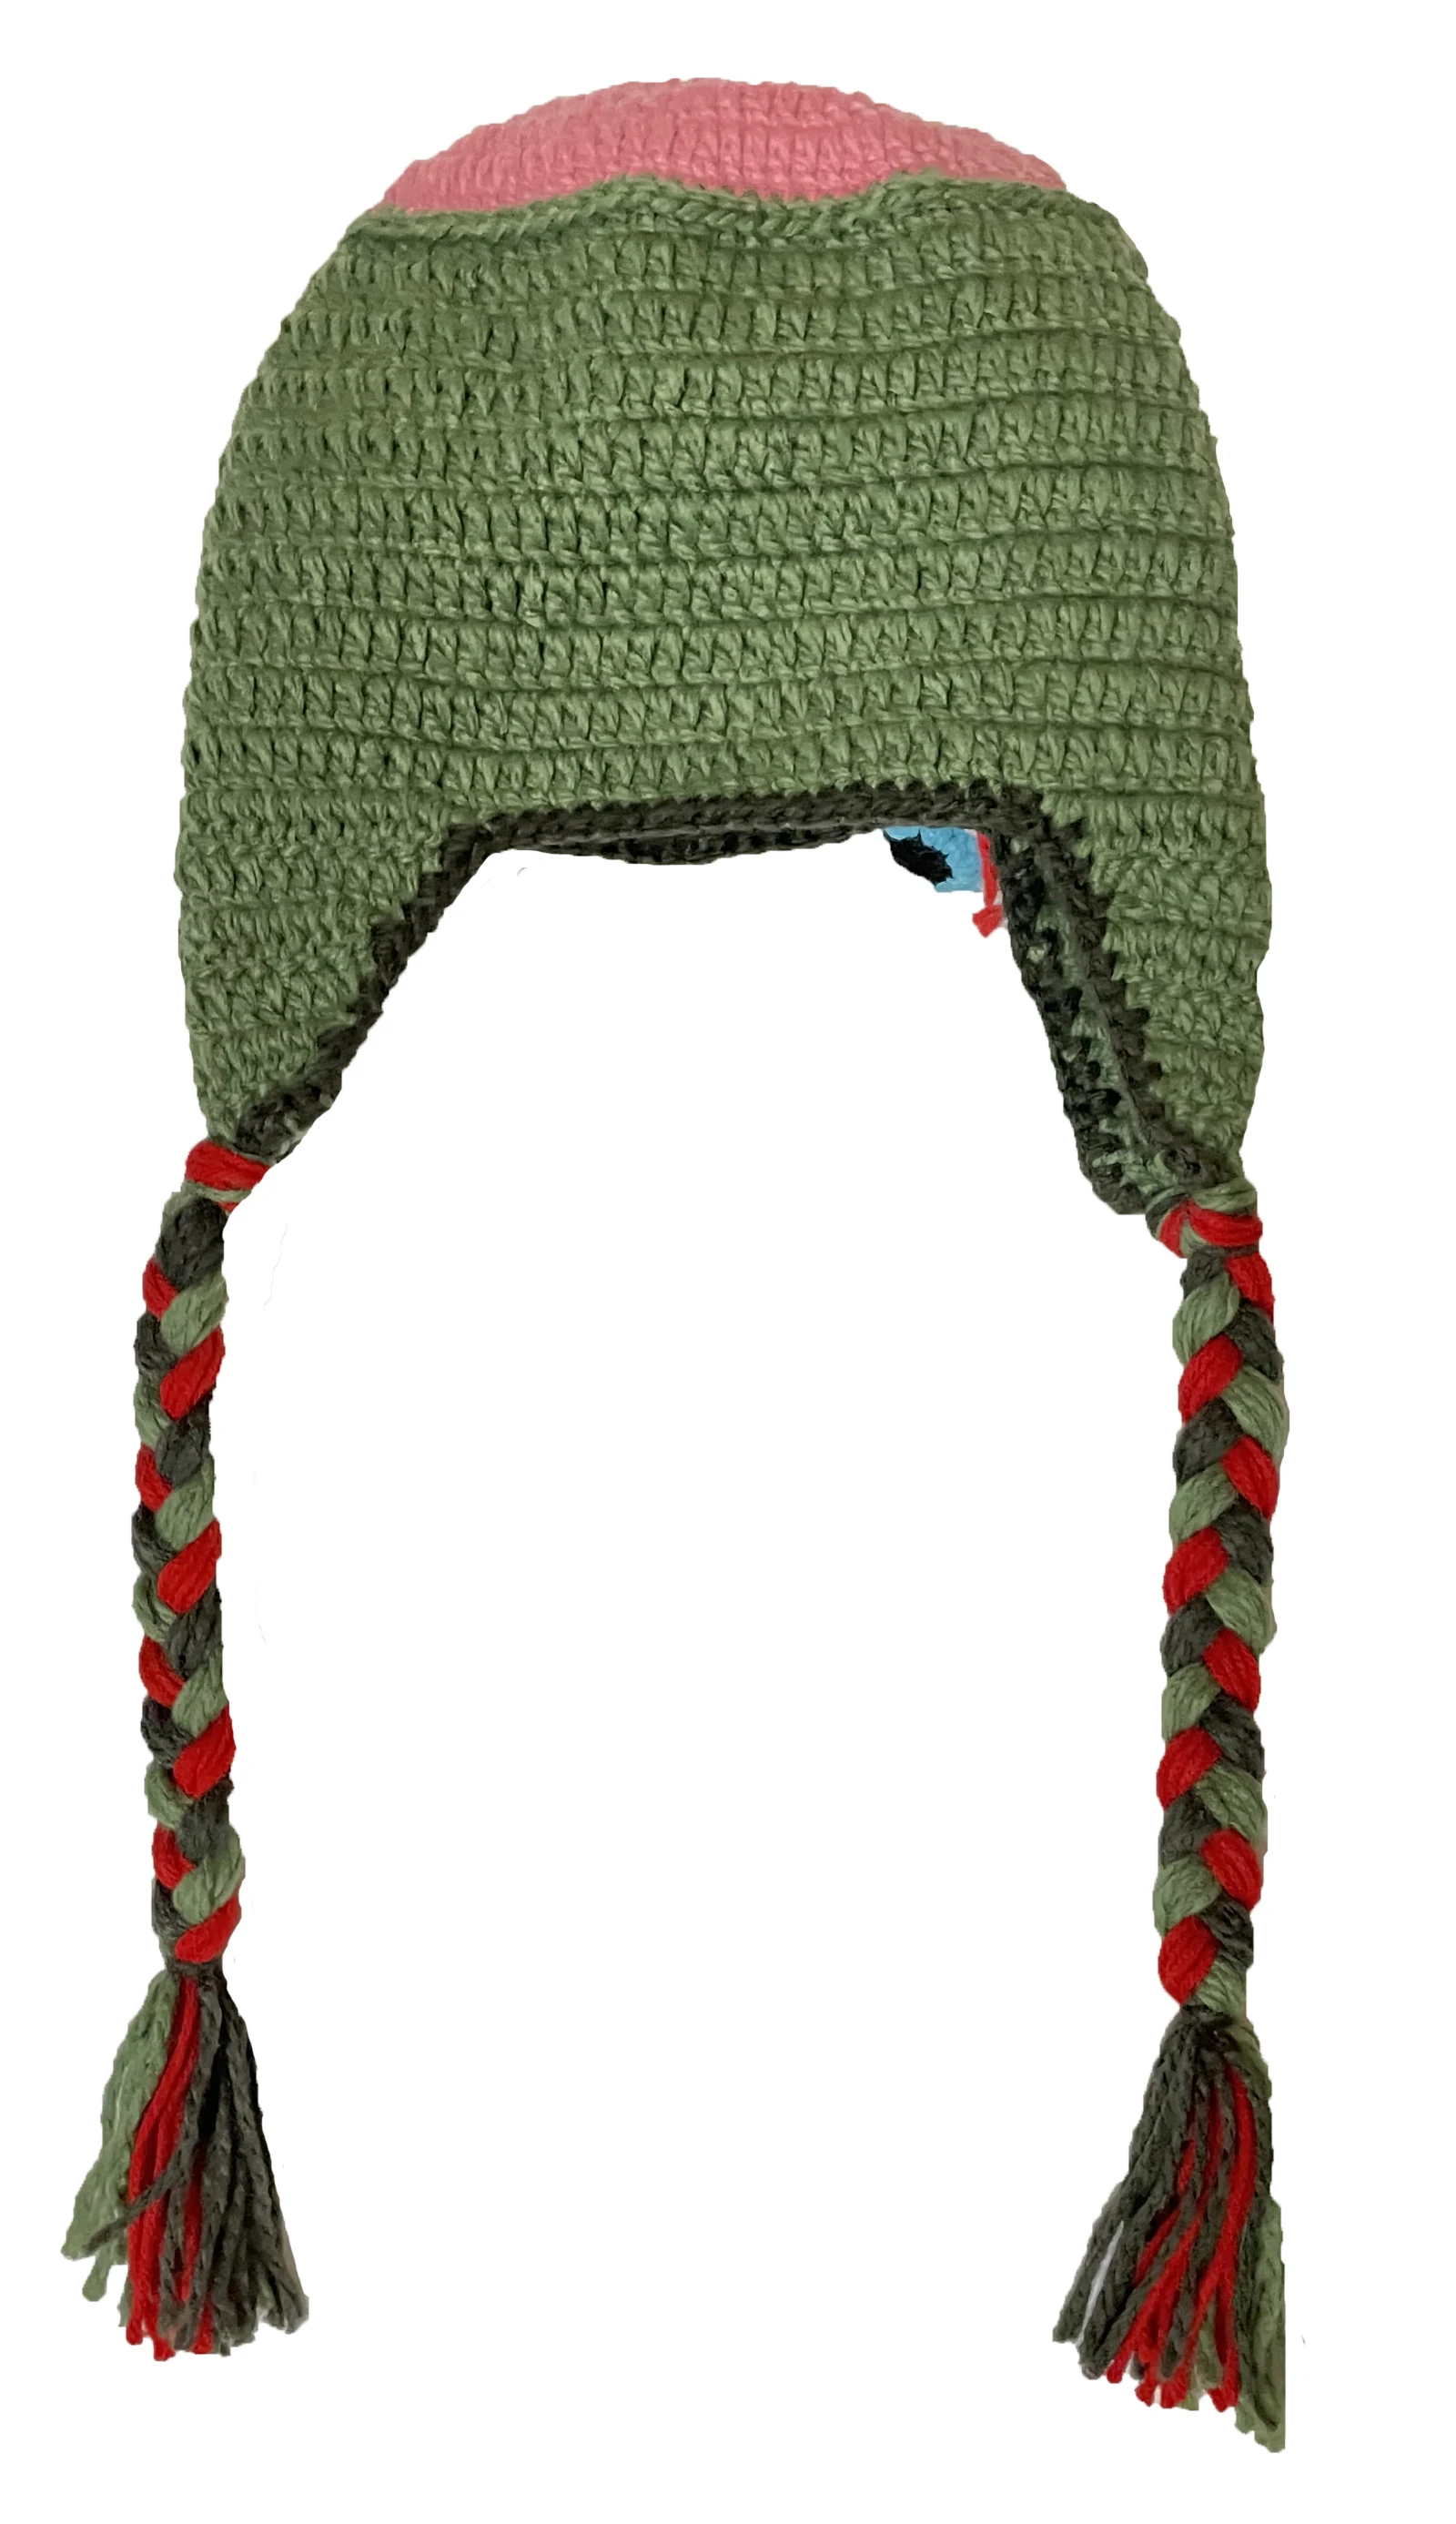 mens leather bomber hat Zombie Hat Eyes Knitted Tassel Beanies Halloween Costume Braid Caps (S for children 48-51cm, L for adult 53-61cm) leather bomber cap